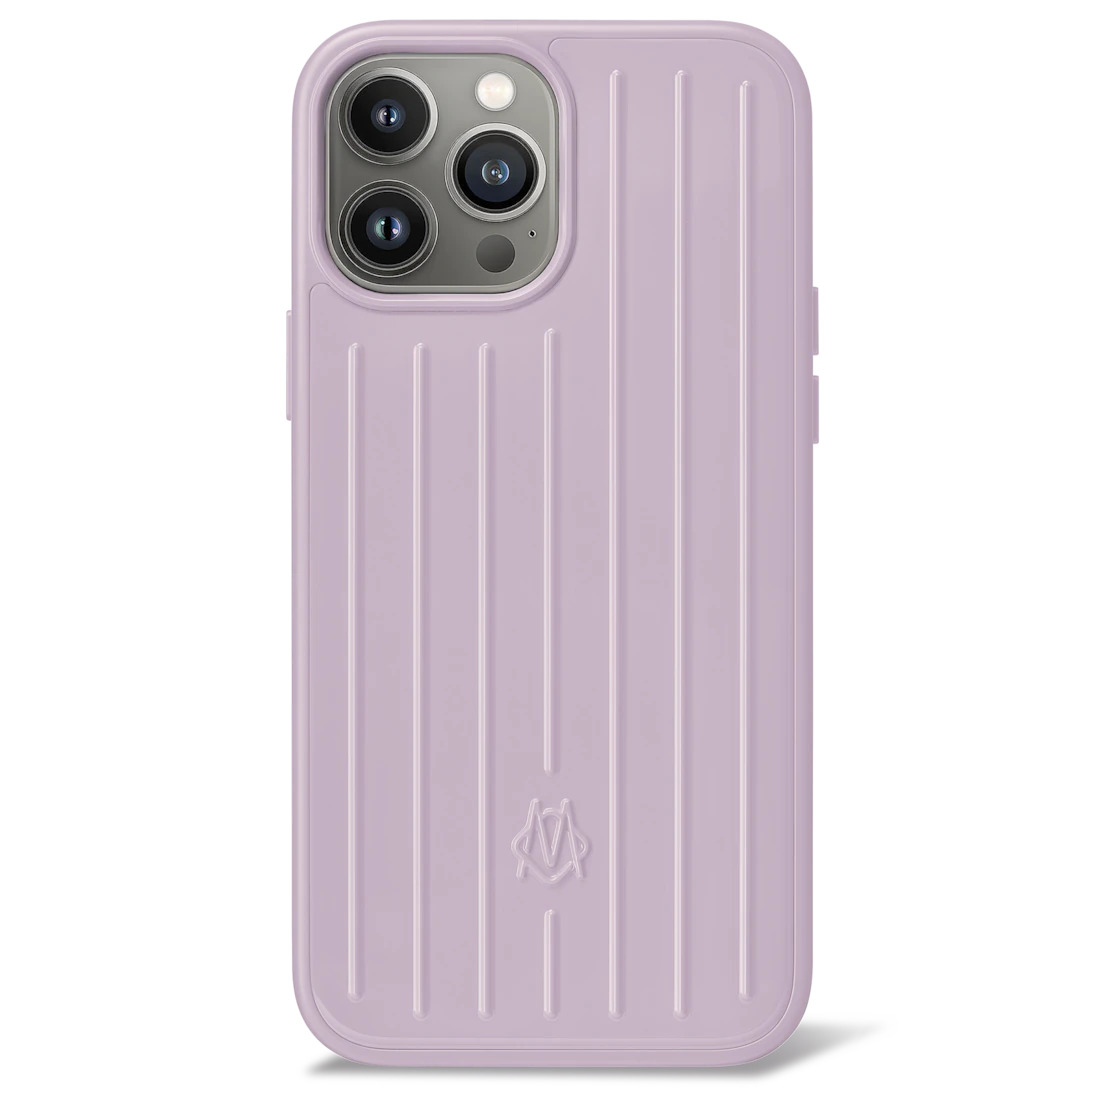 iPhone Accessories Lavande Purple Case for iPhone 13 Pro Max - 1